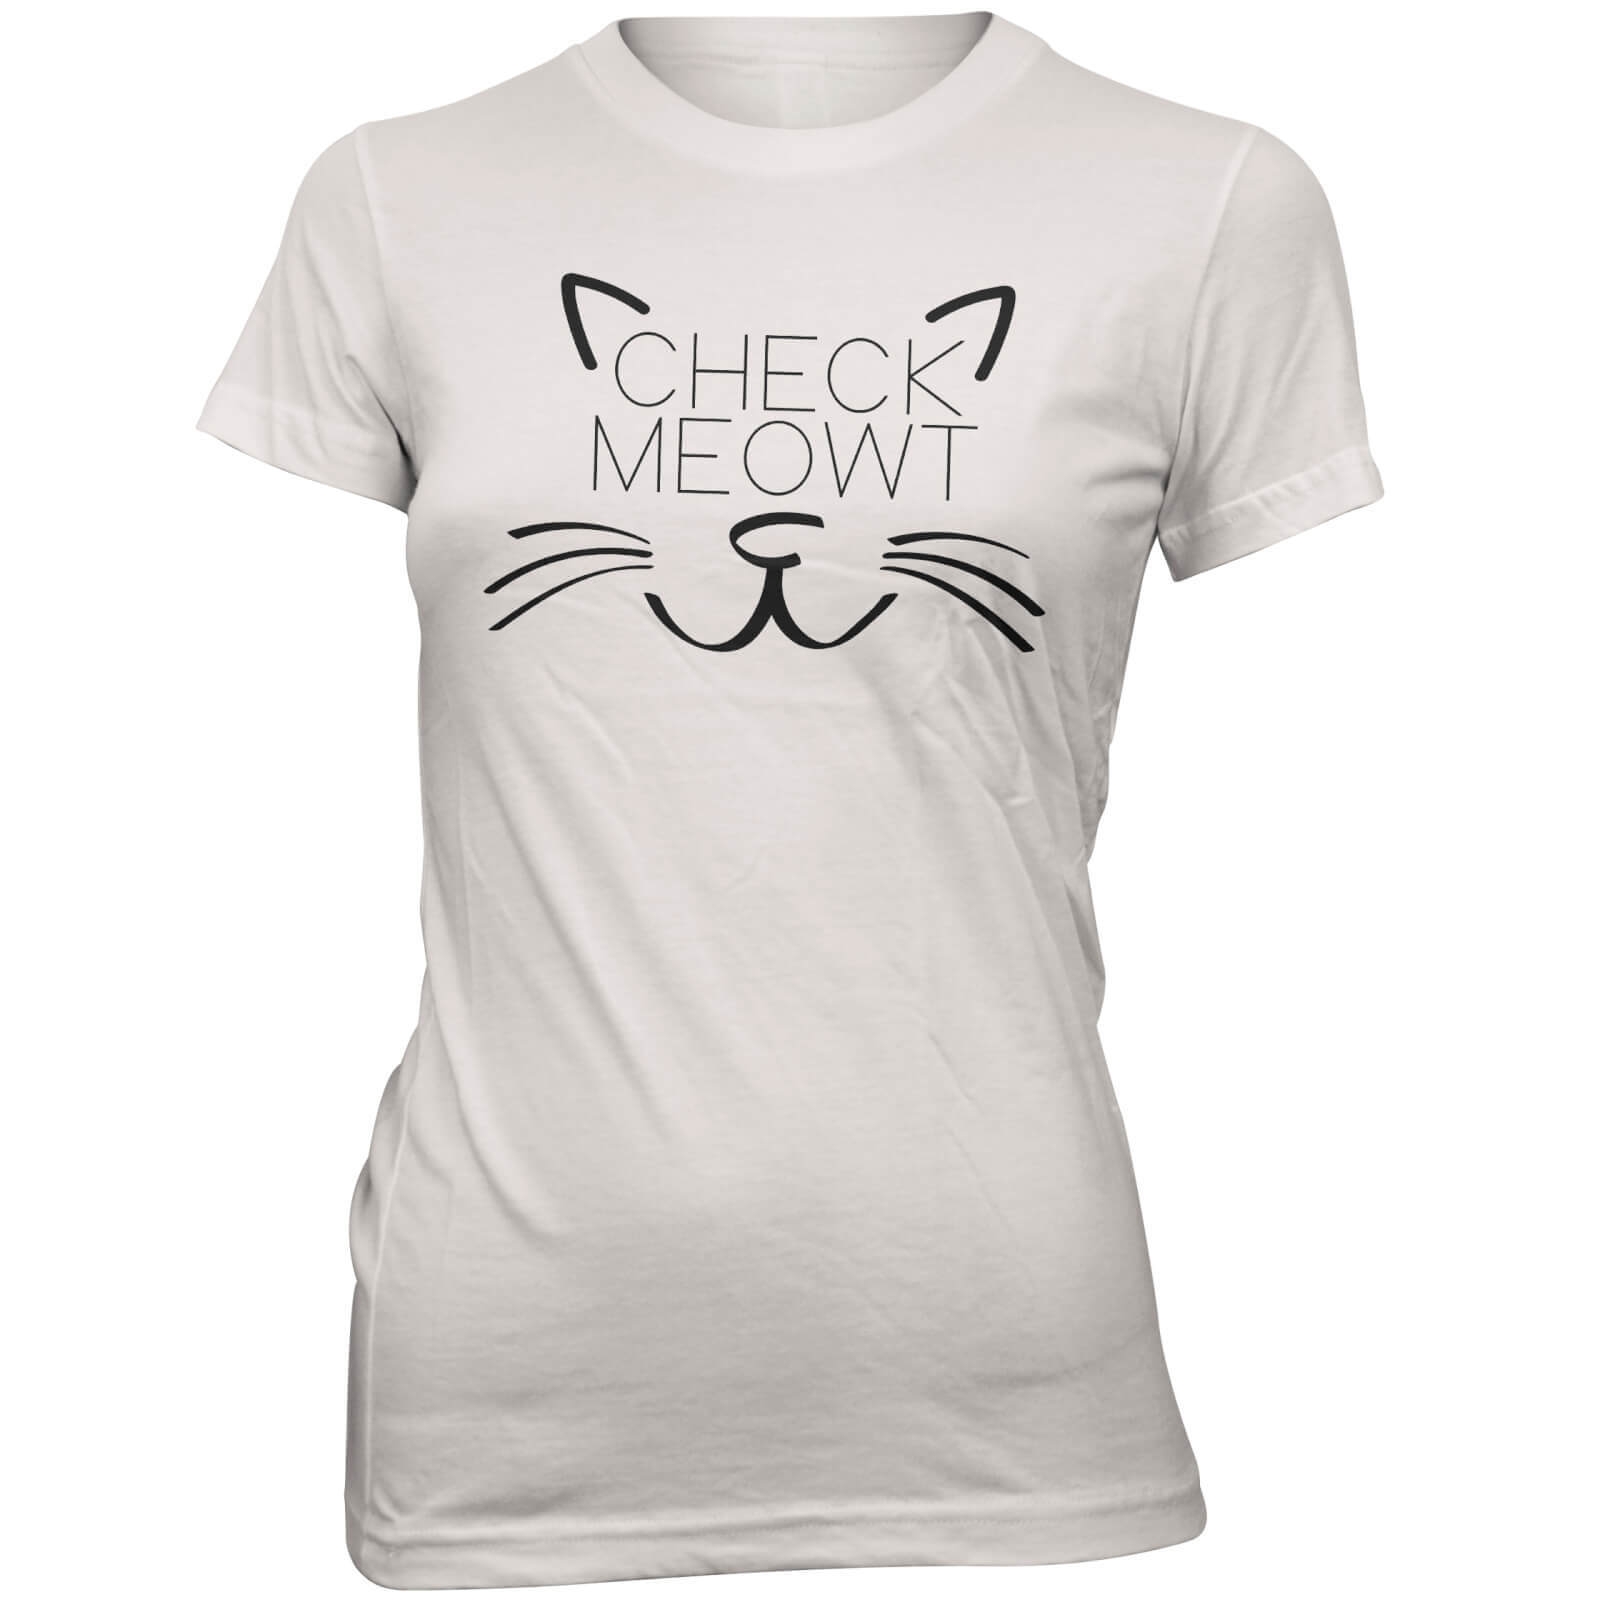 Check Meowt Women's Slogan T-Shirt - S - White